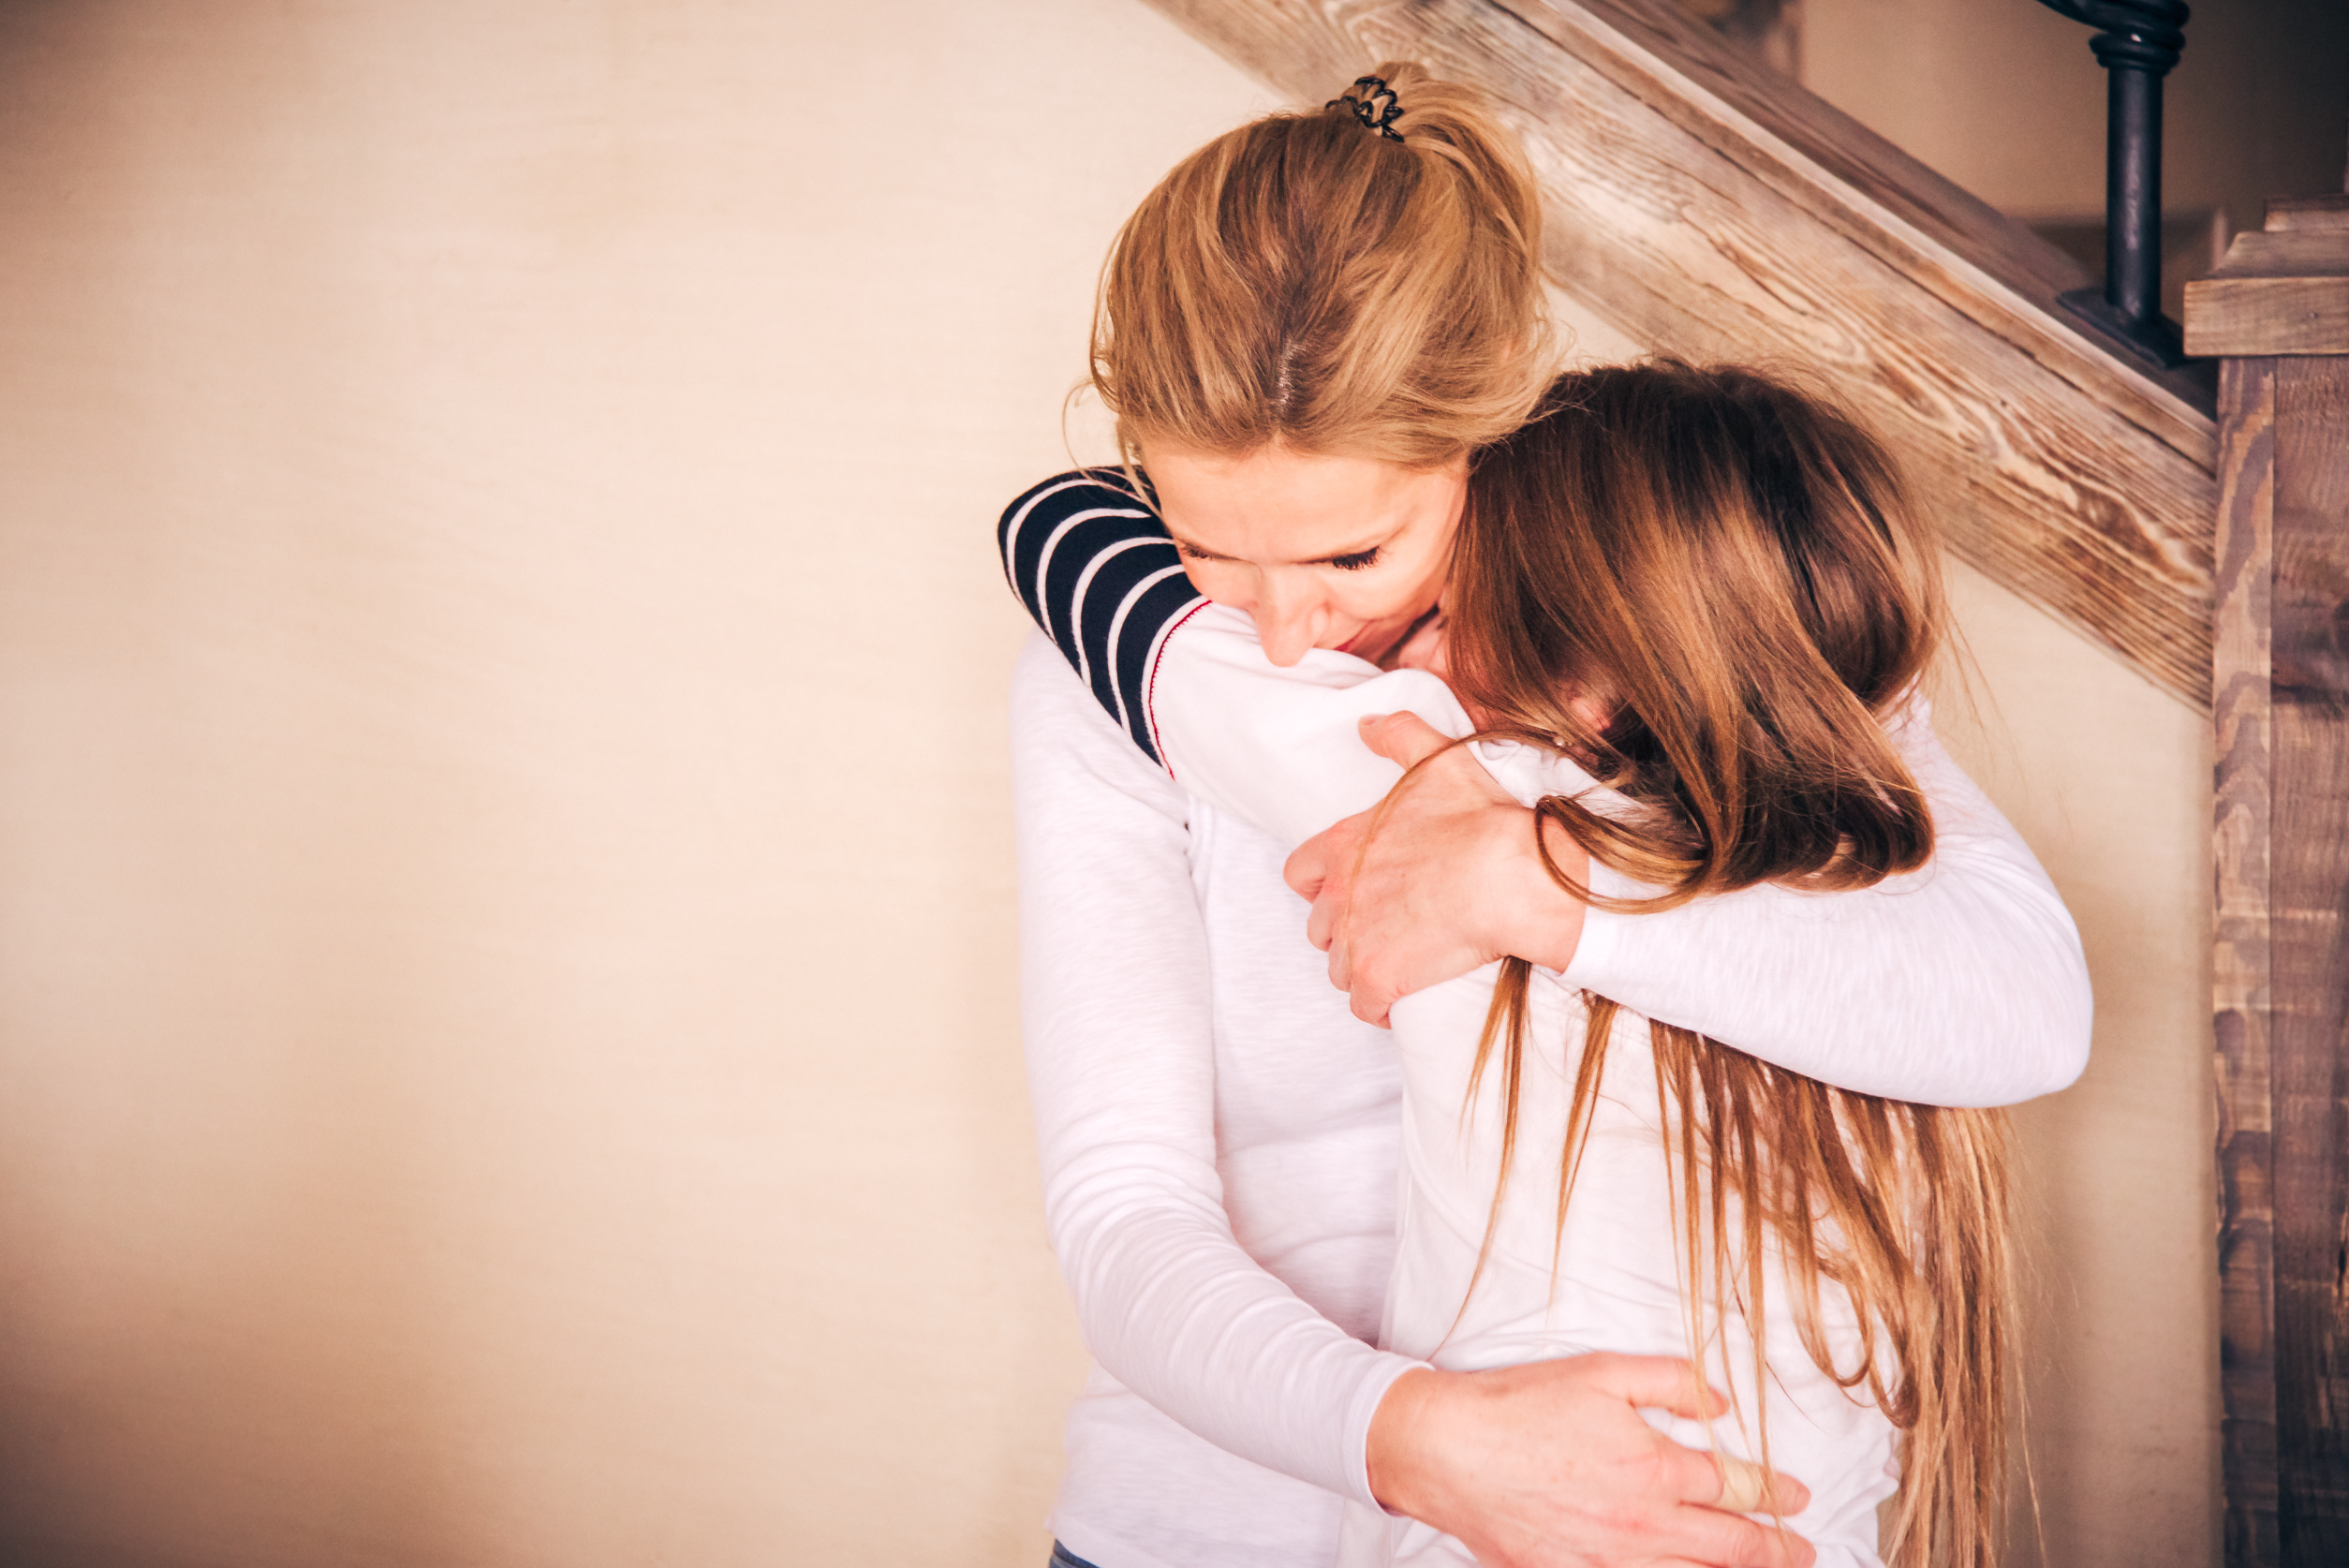 Fille serrant une femme dans ses bras | Source : Shutterstock